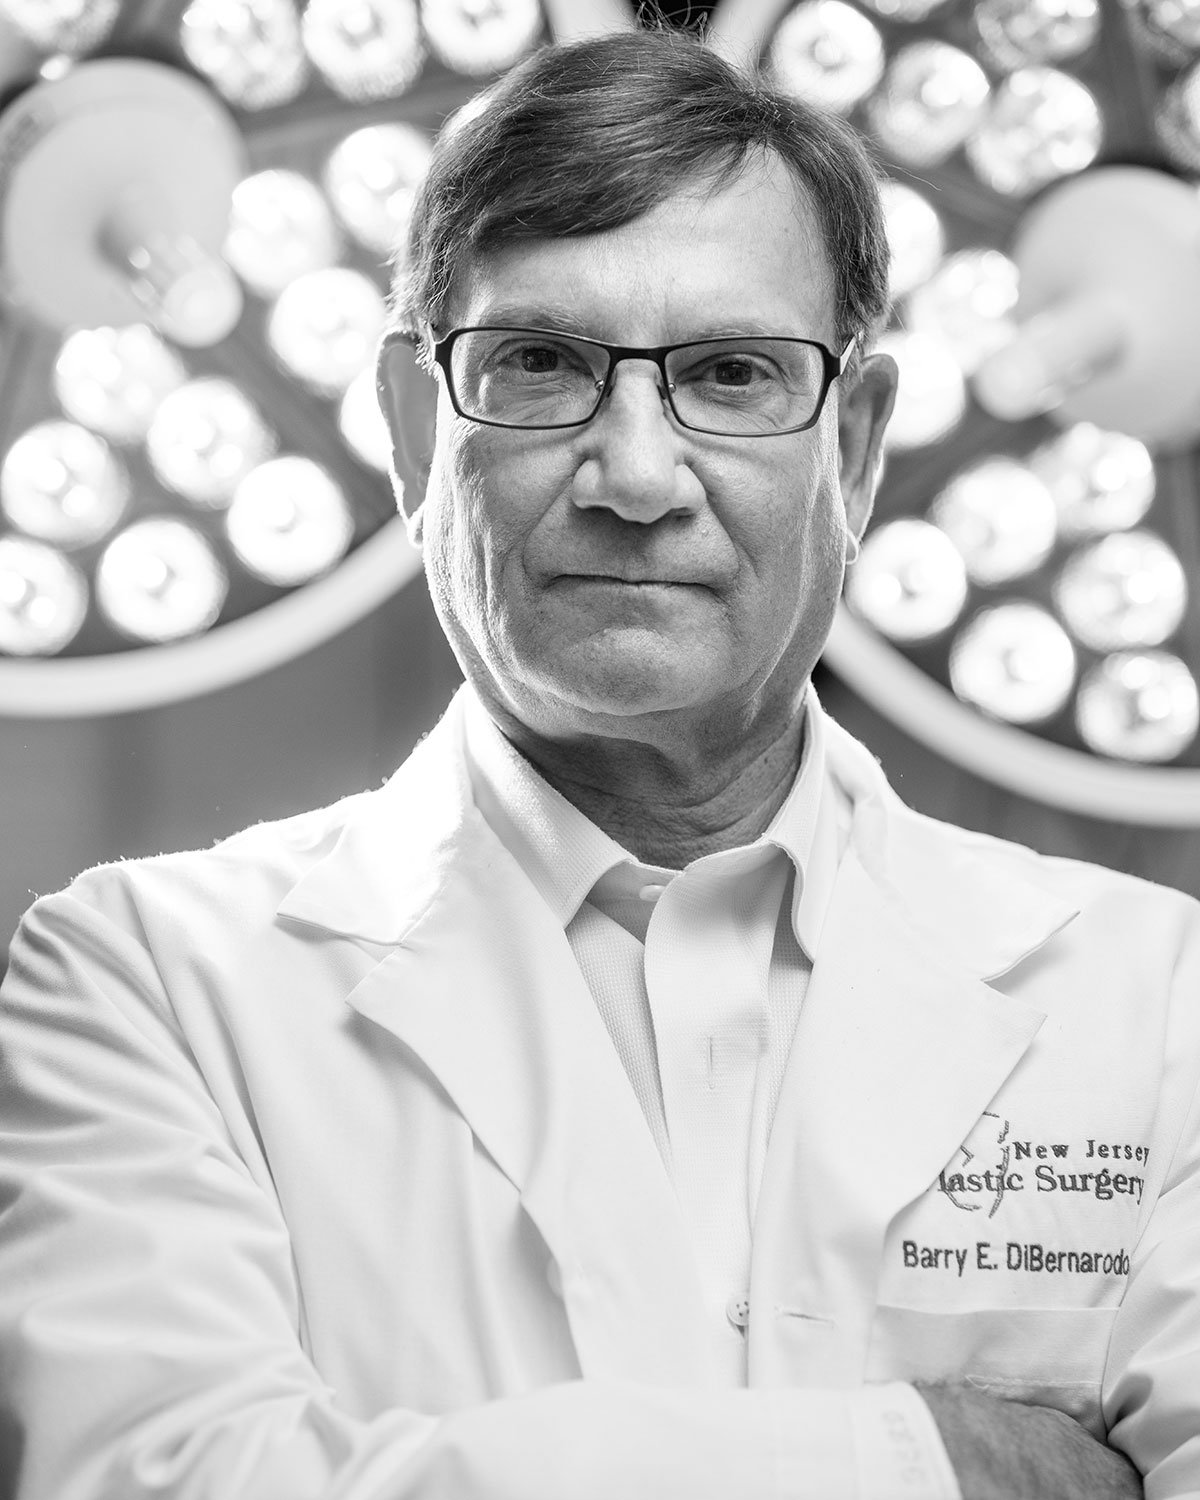 Dr. DiBernardo - New Jersey Plastic Surgeon